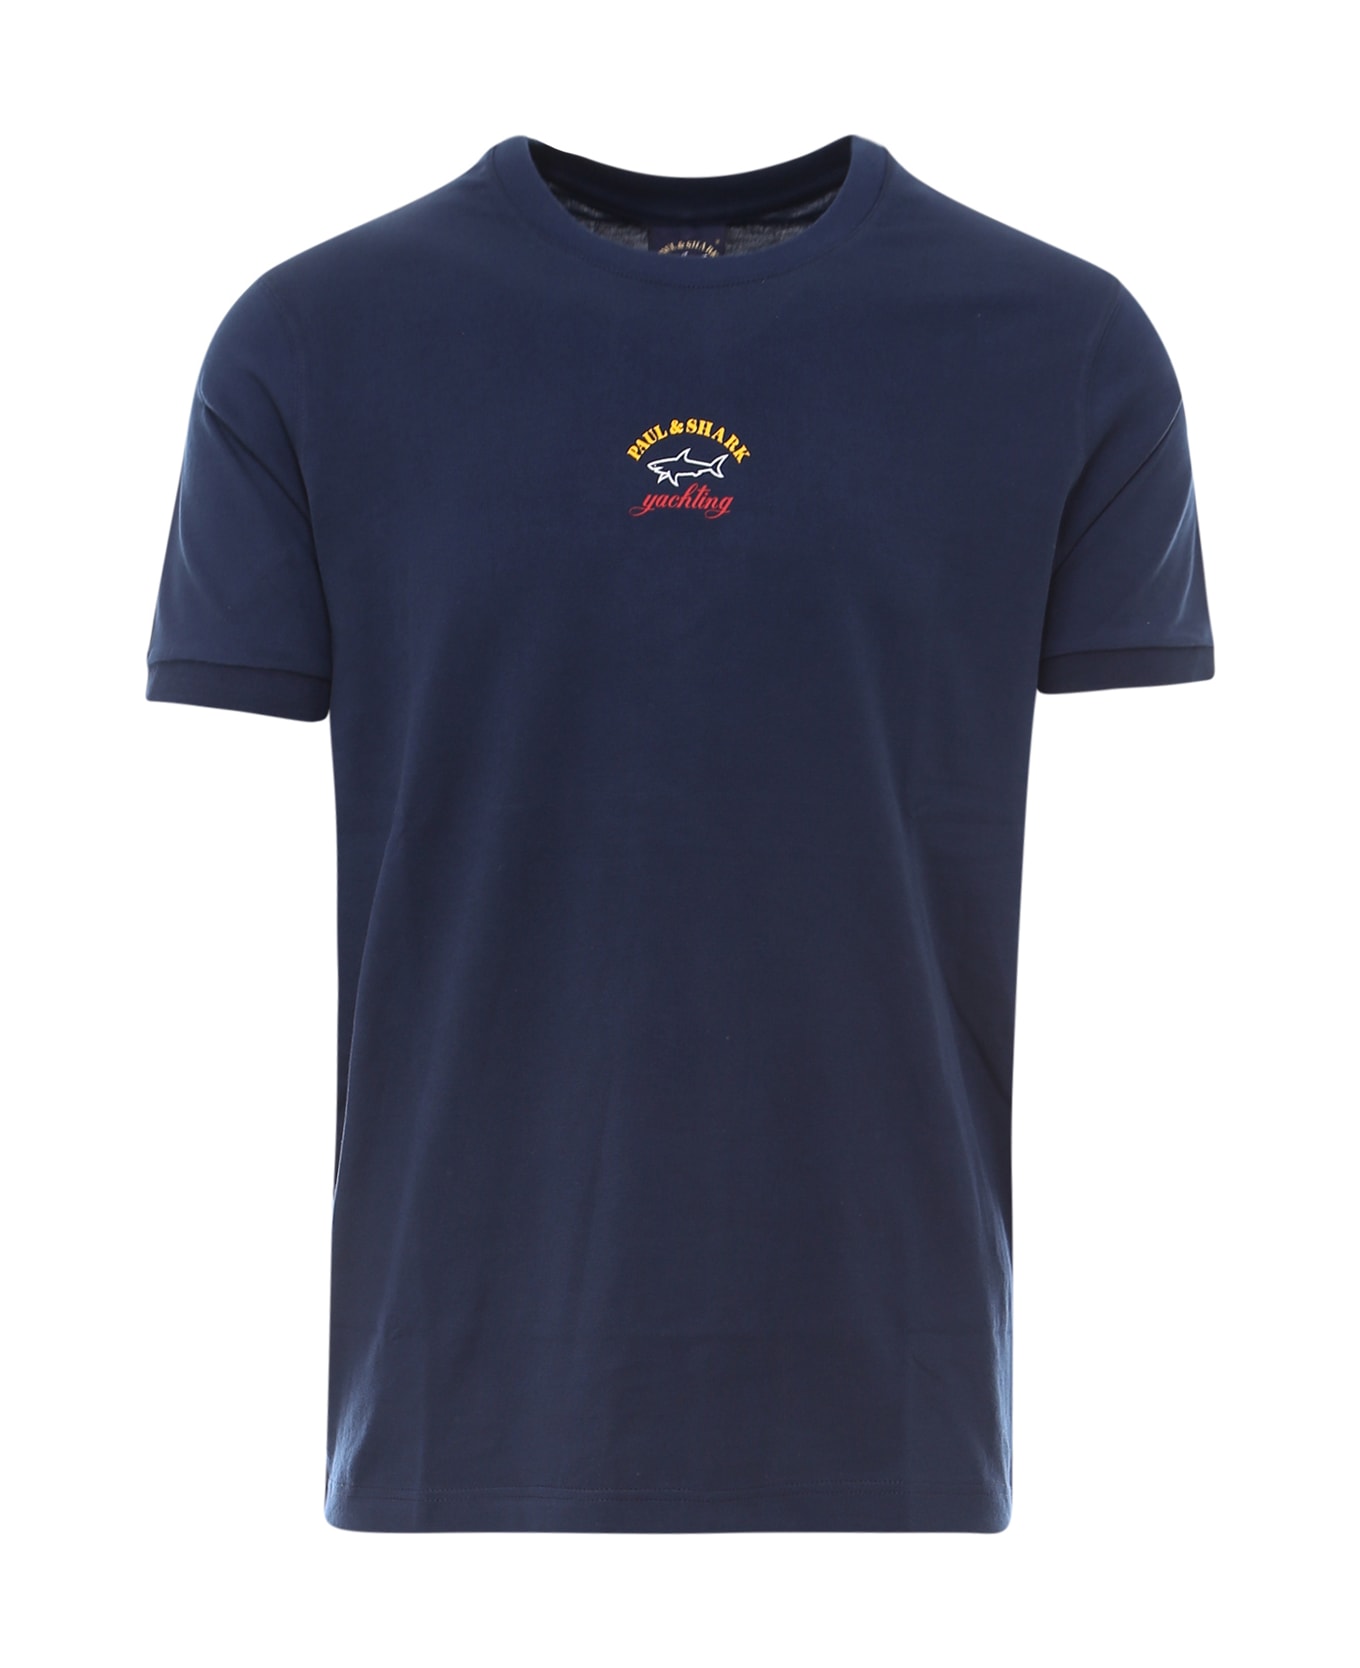 Paul&Shark T-shirt - BLUE シャツ